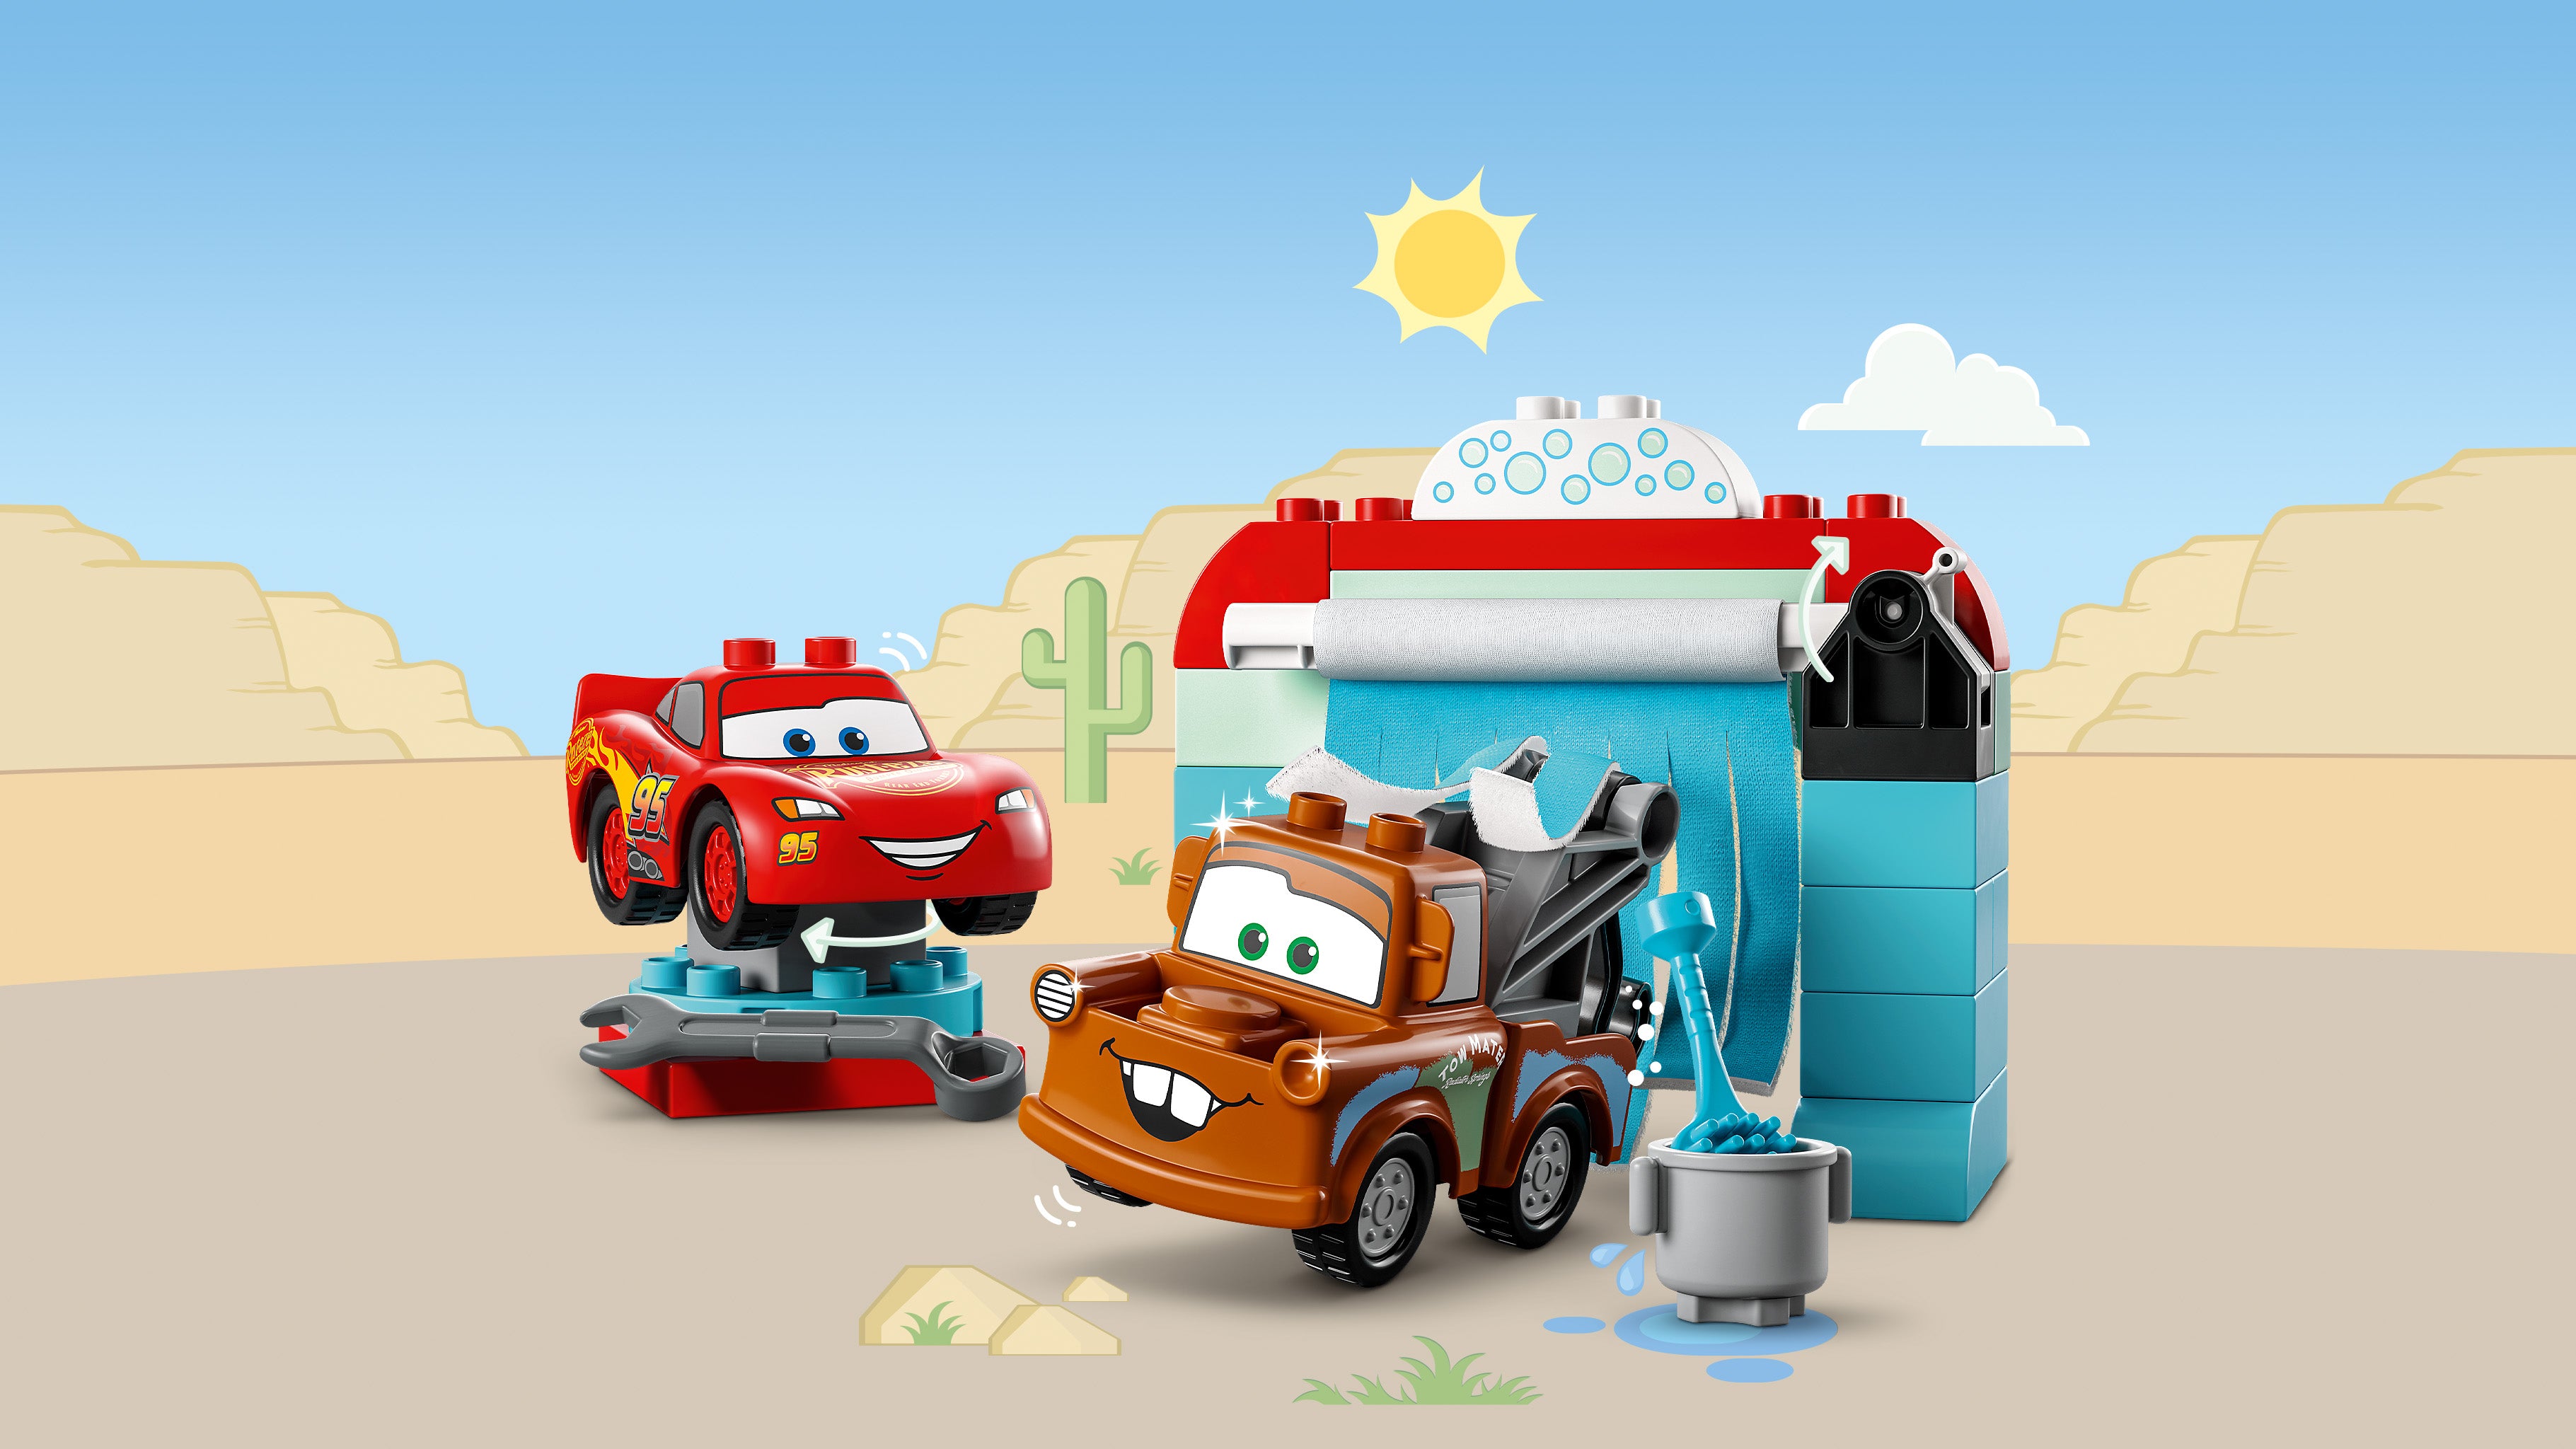 Lego 10996 Lightning McQueen & Maters Car Wash Fun